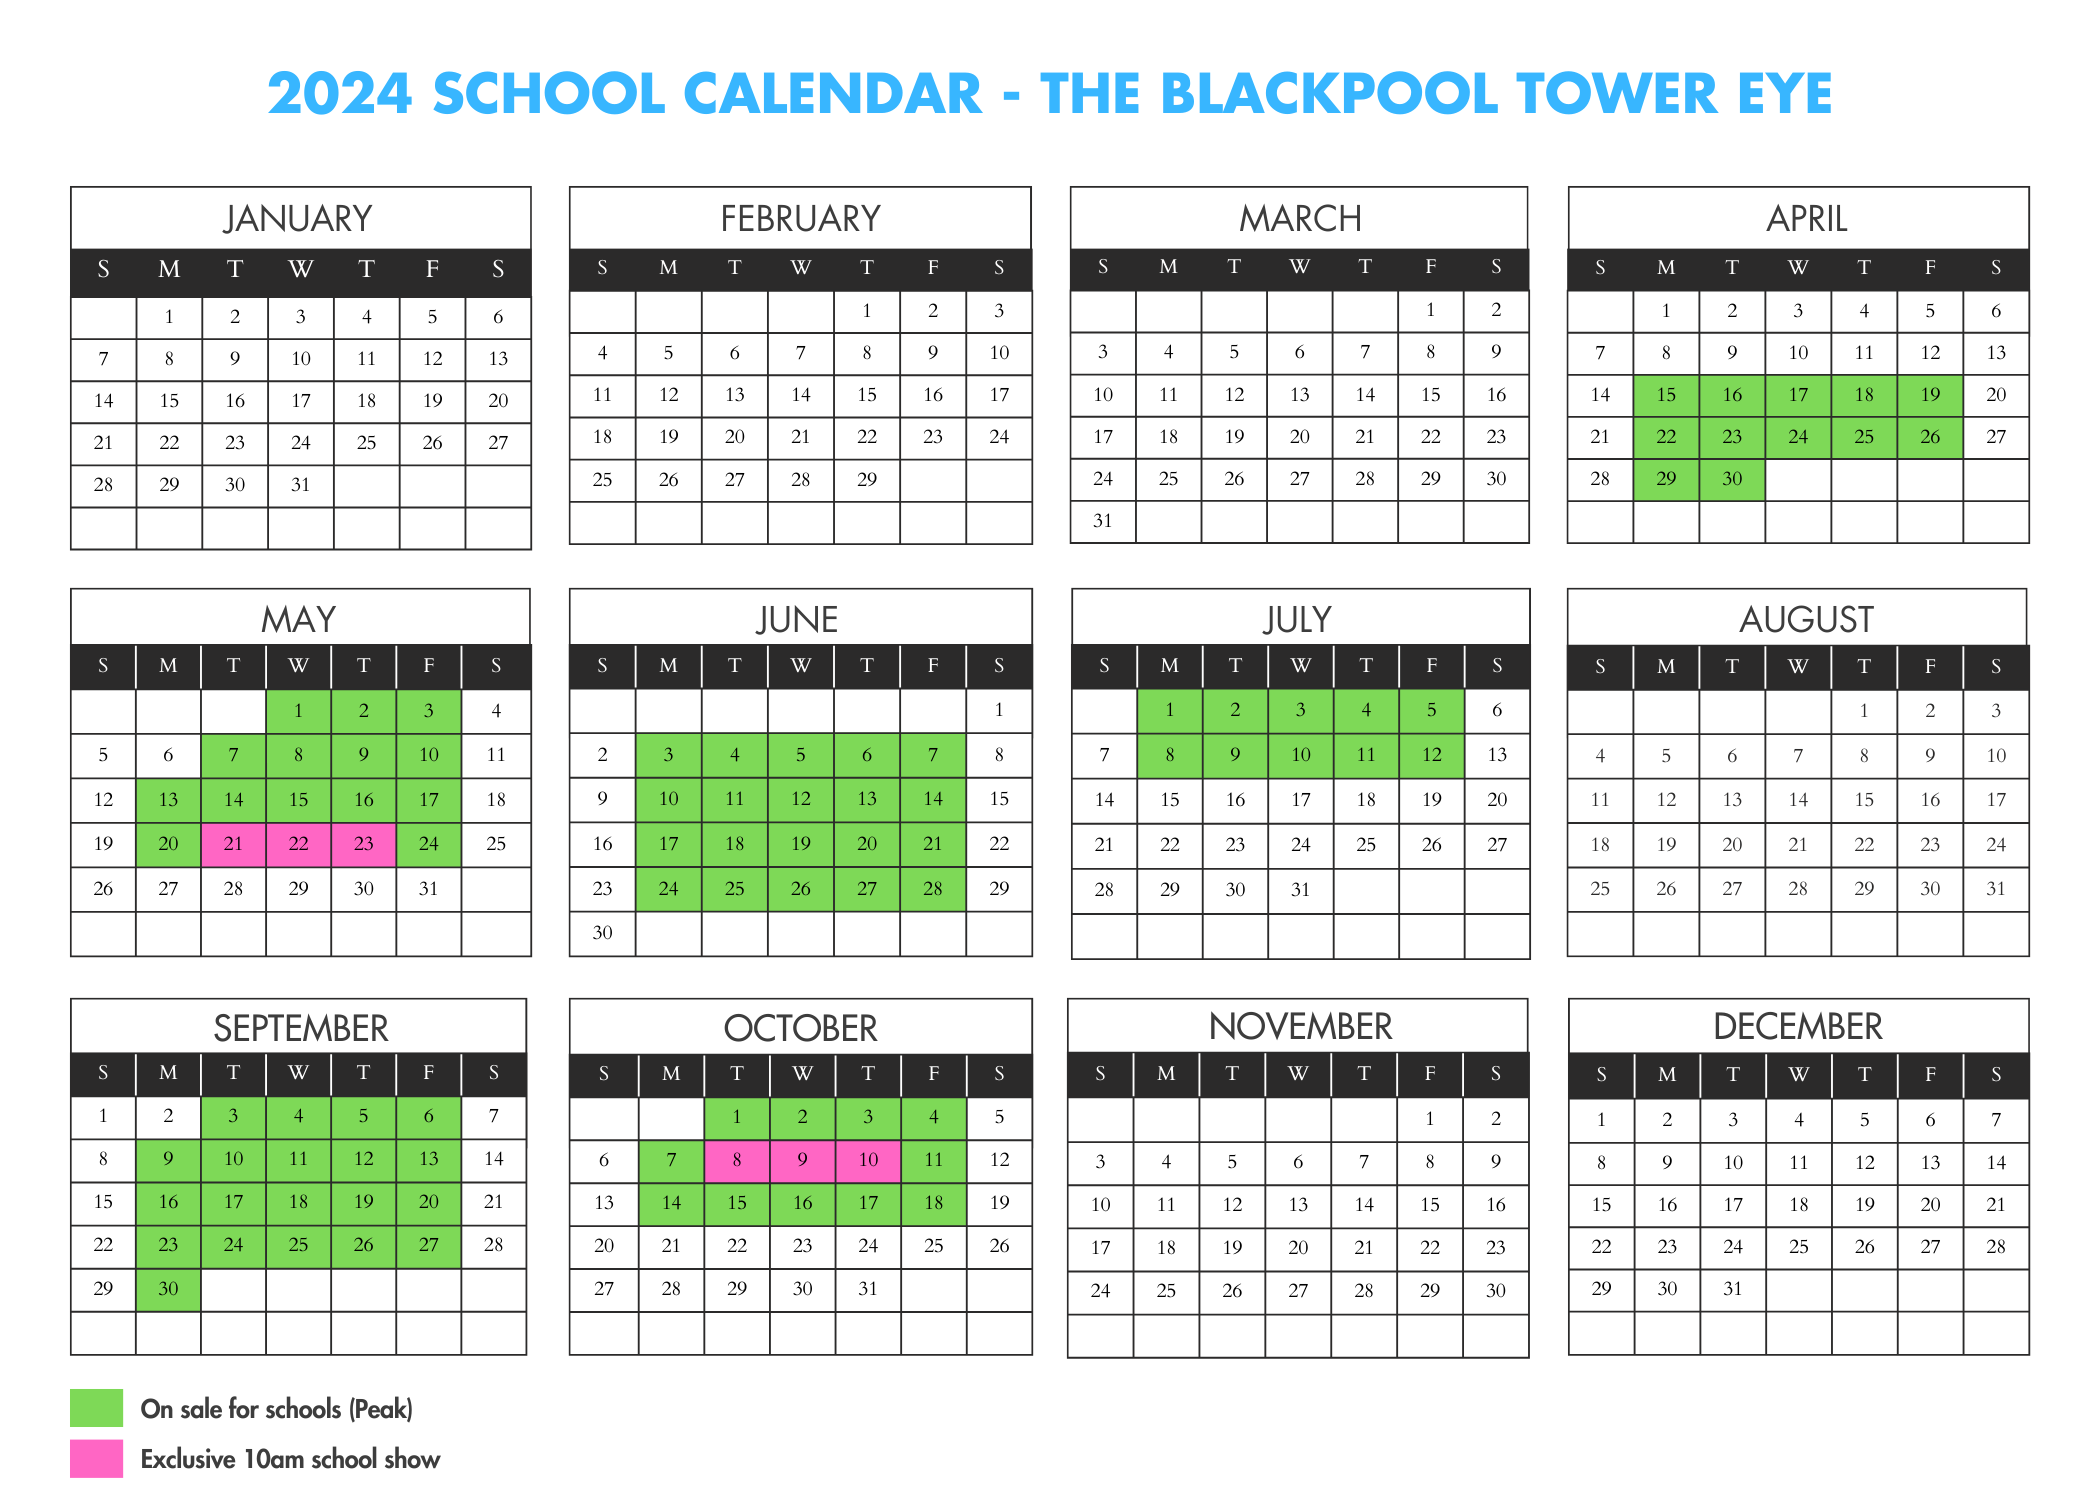 2024 School Calendar (2)